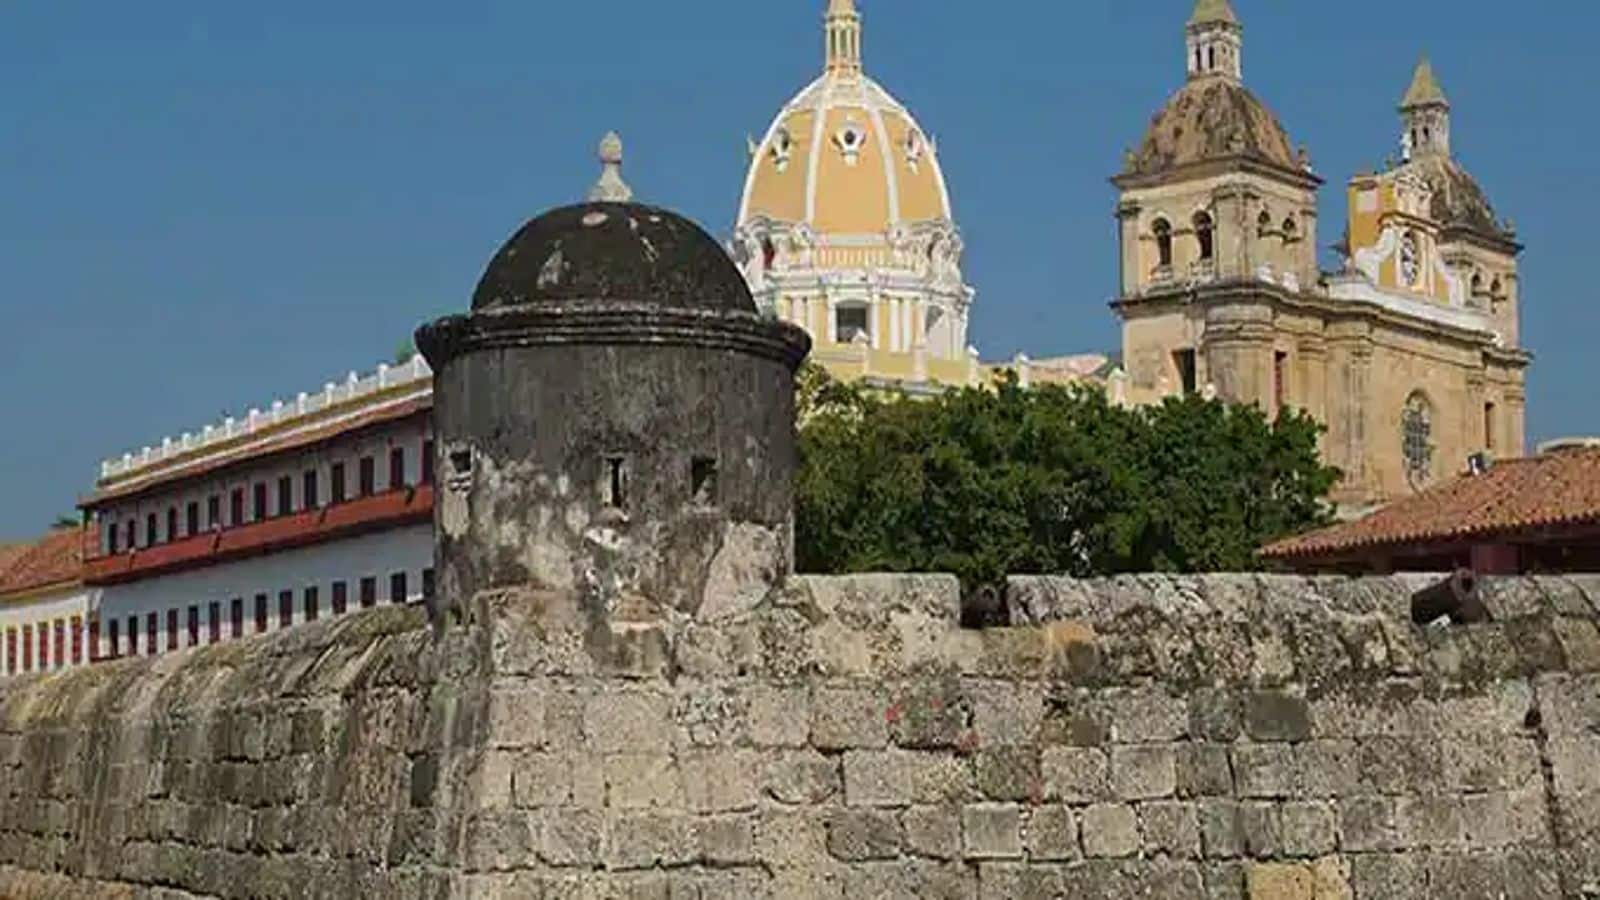 Places that speak of Cartagena's pirate defense legacy